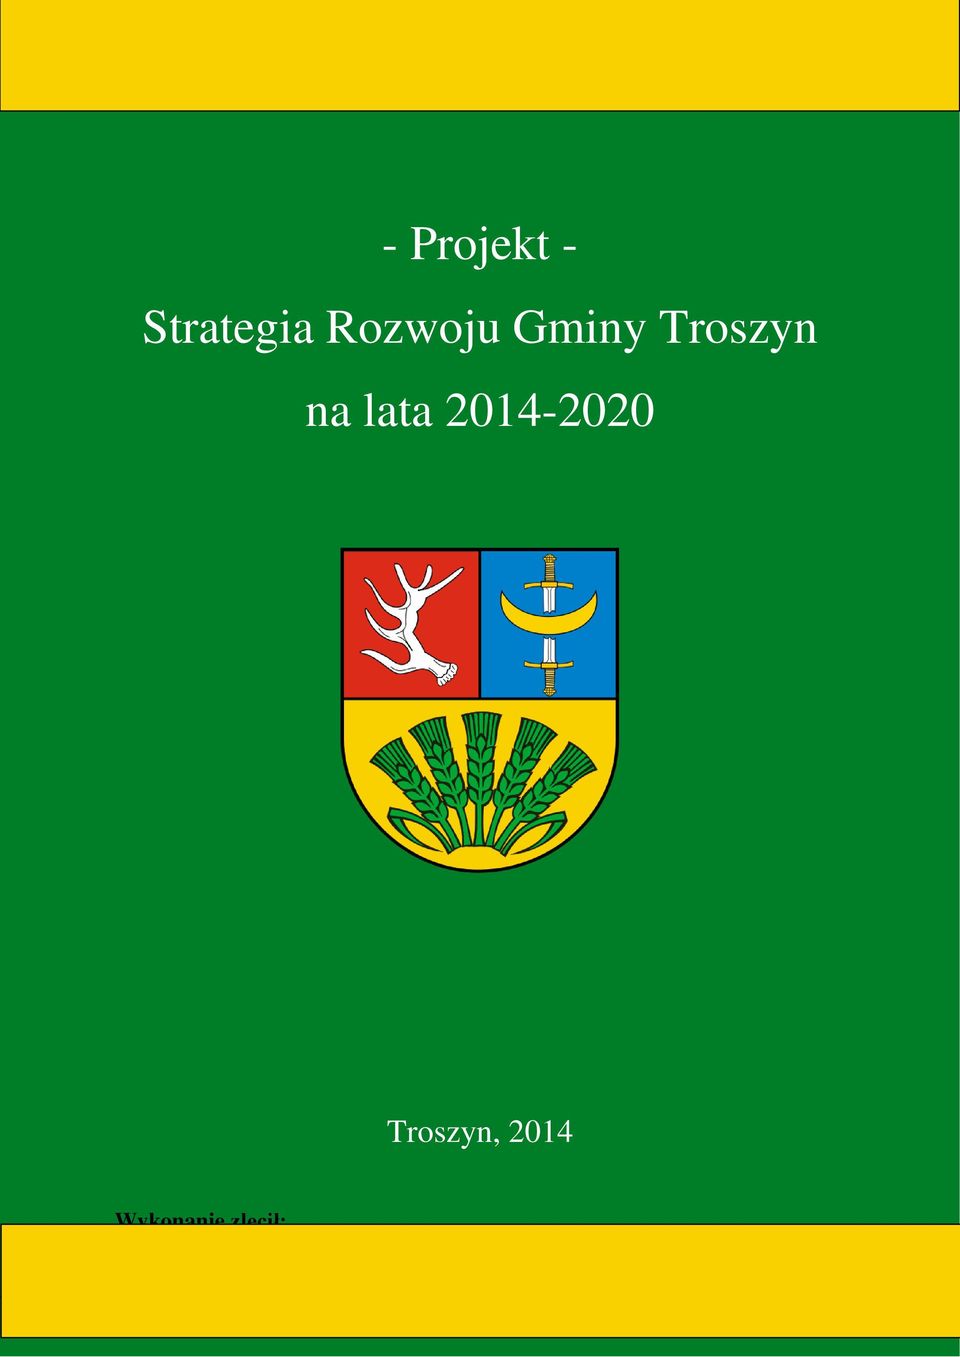 lata 2014-2020 Troszyn,